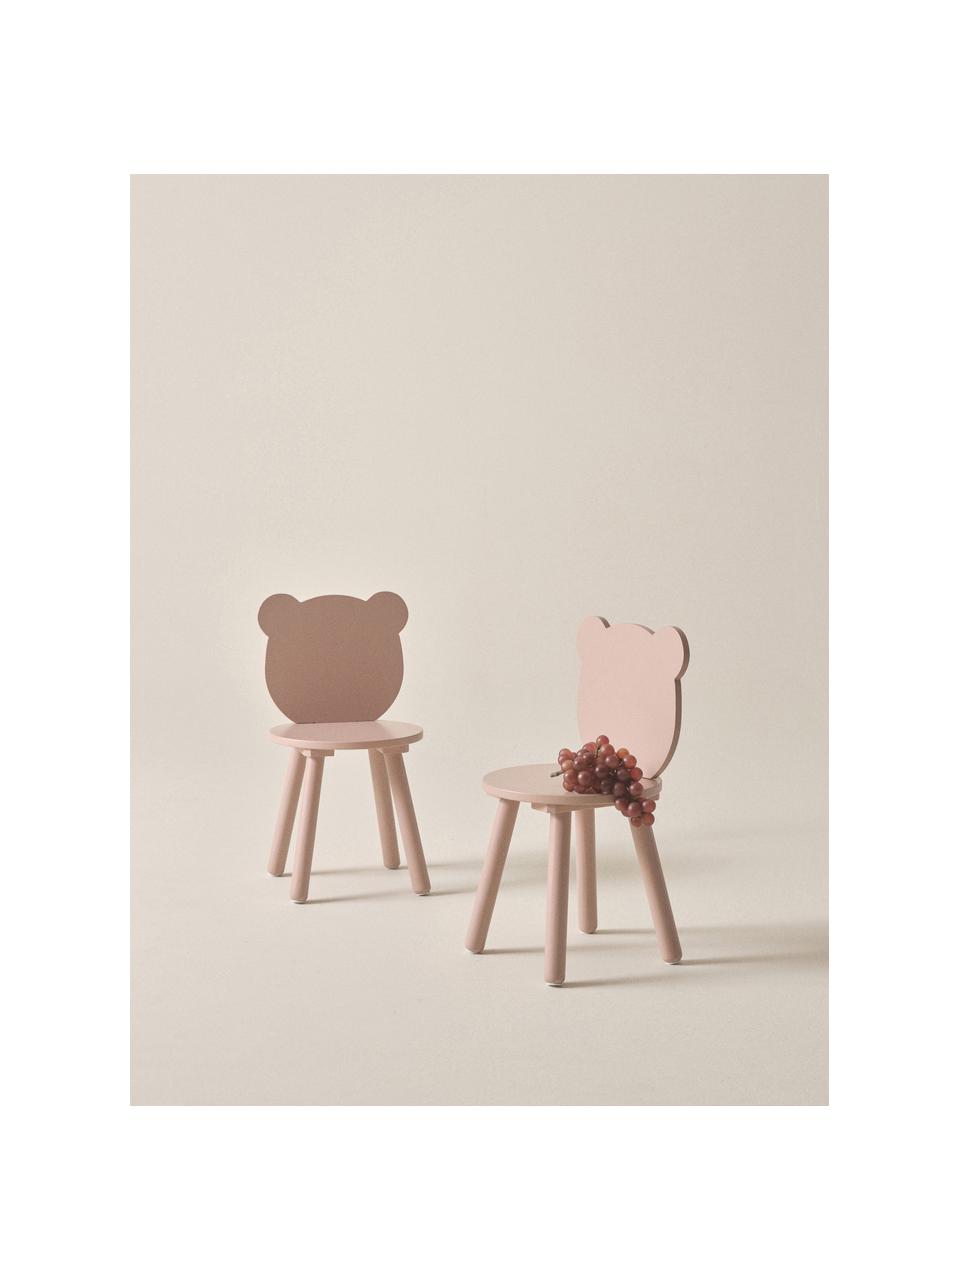 Holz-Kinderstühle Beary in Rosa, 2 Stück, Kiefernholz, Mitteldichte Holzfaserplatte (MDF), lackiert, Rosa, B 30 x H 58 cm